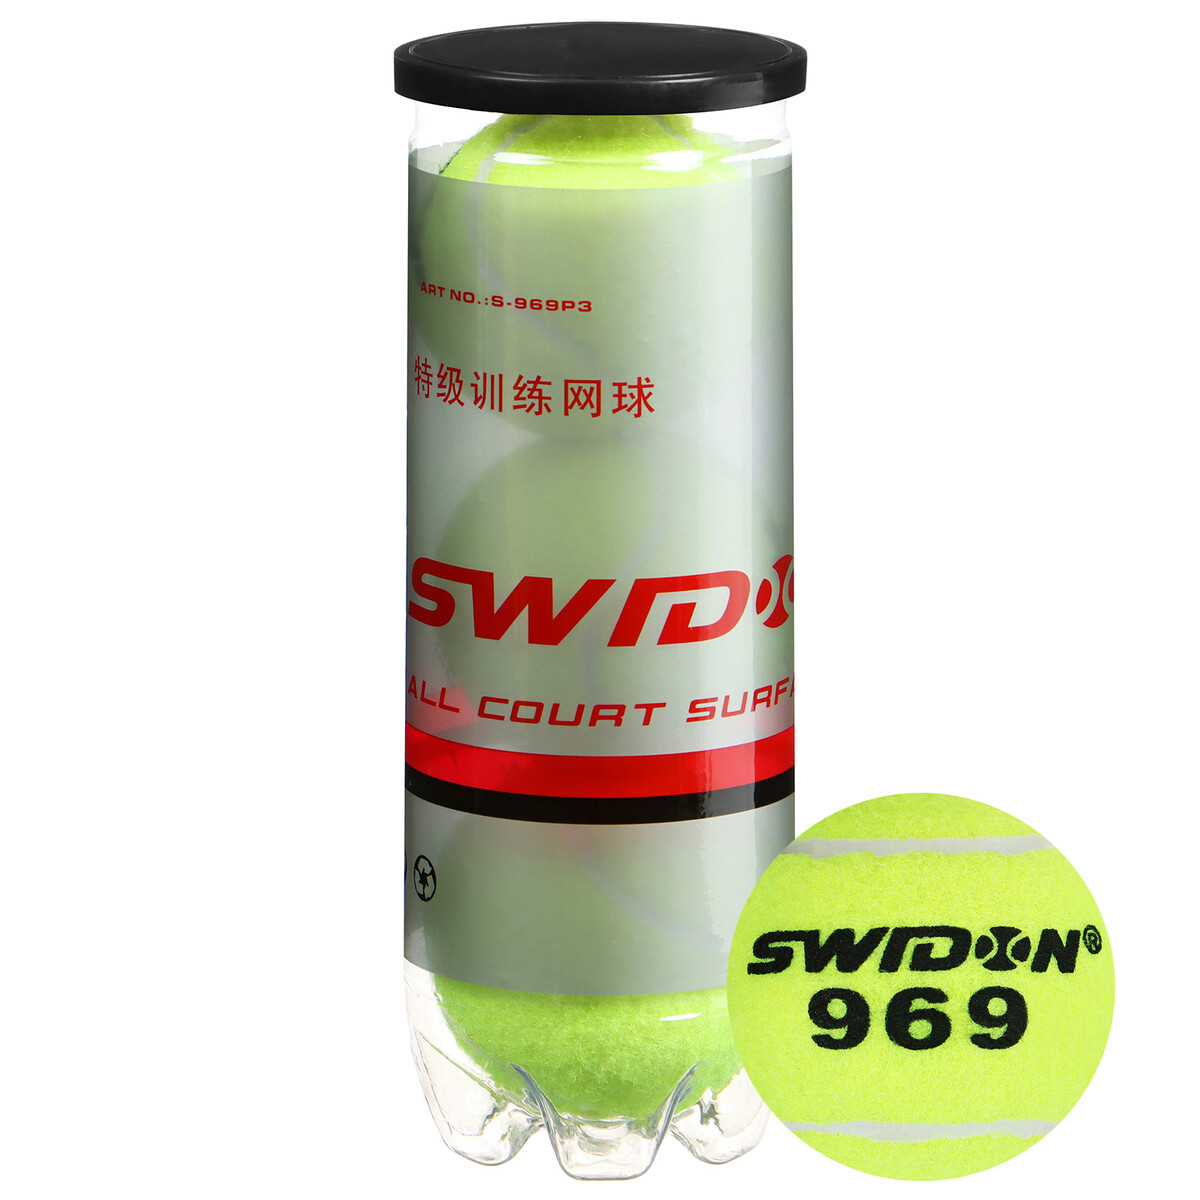 Набор мячей для большого тенниса swidon 969 тренировочный, 3 шт. набор мячей для большого тенниса swidon 969 тренировочный 3 шт